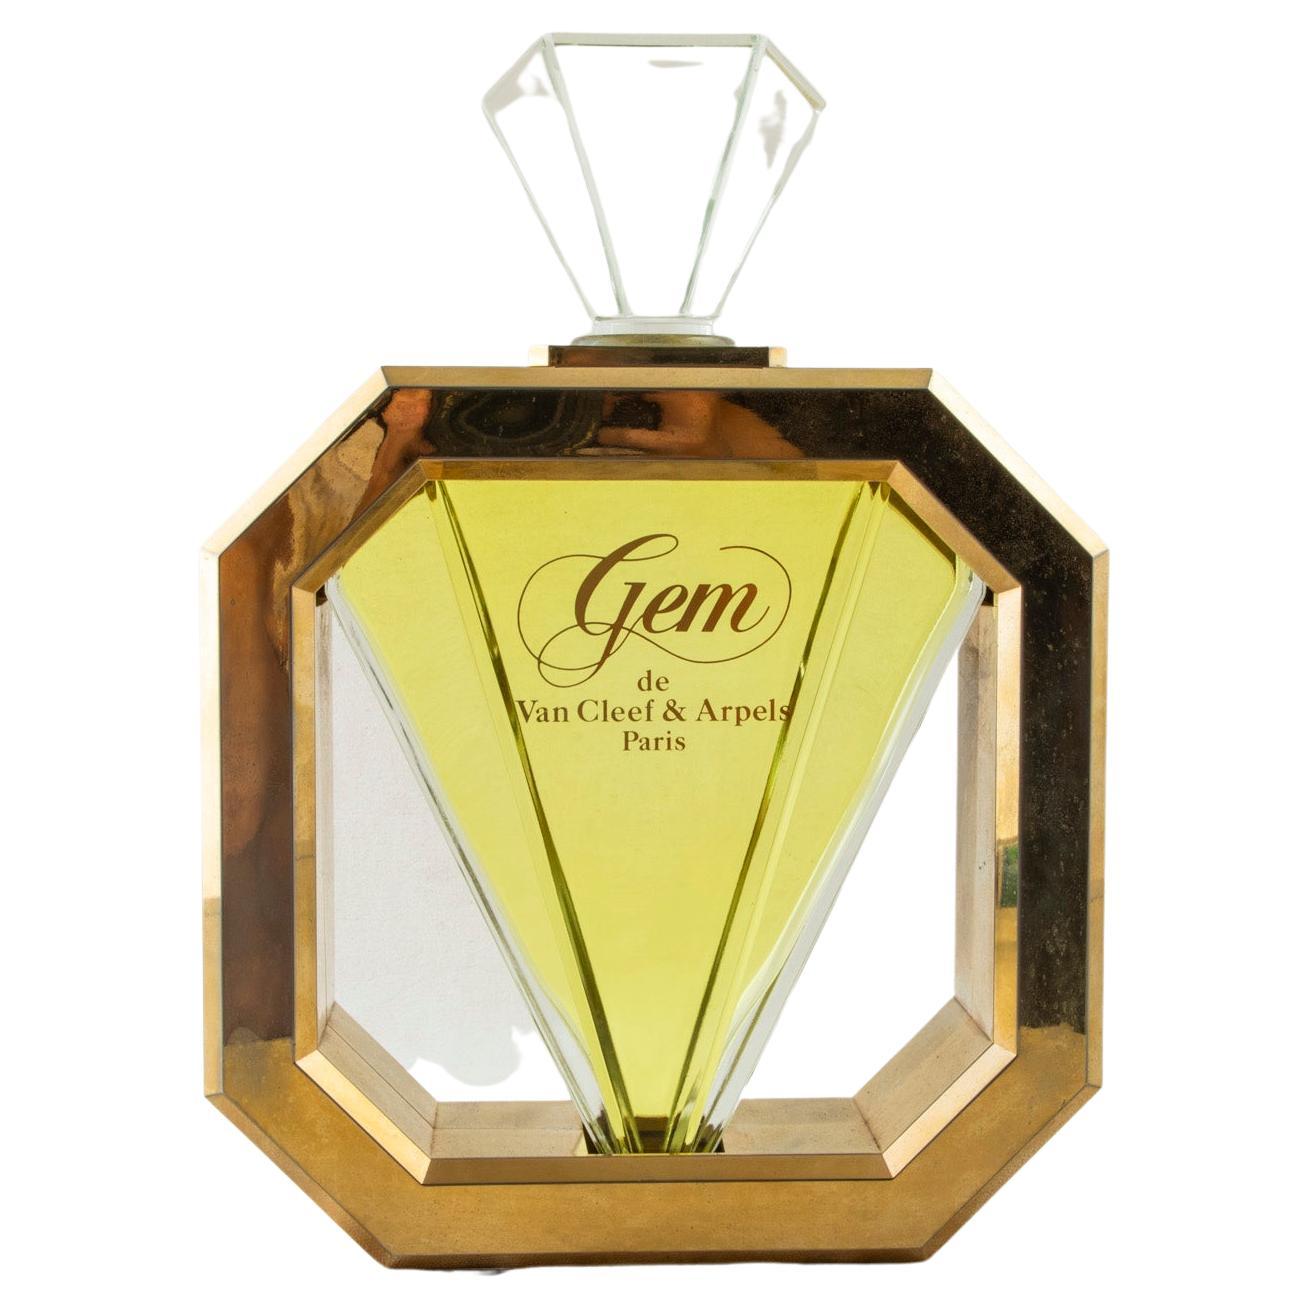 Large Scale 20th Century French Gem de Van Cleef & Arpels Perfume Factice